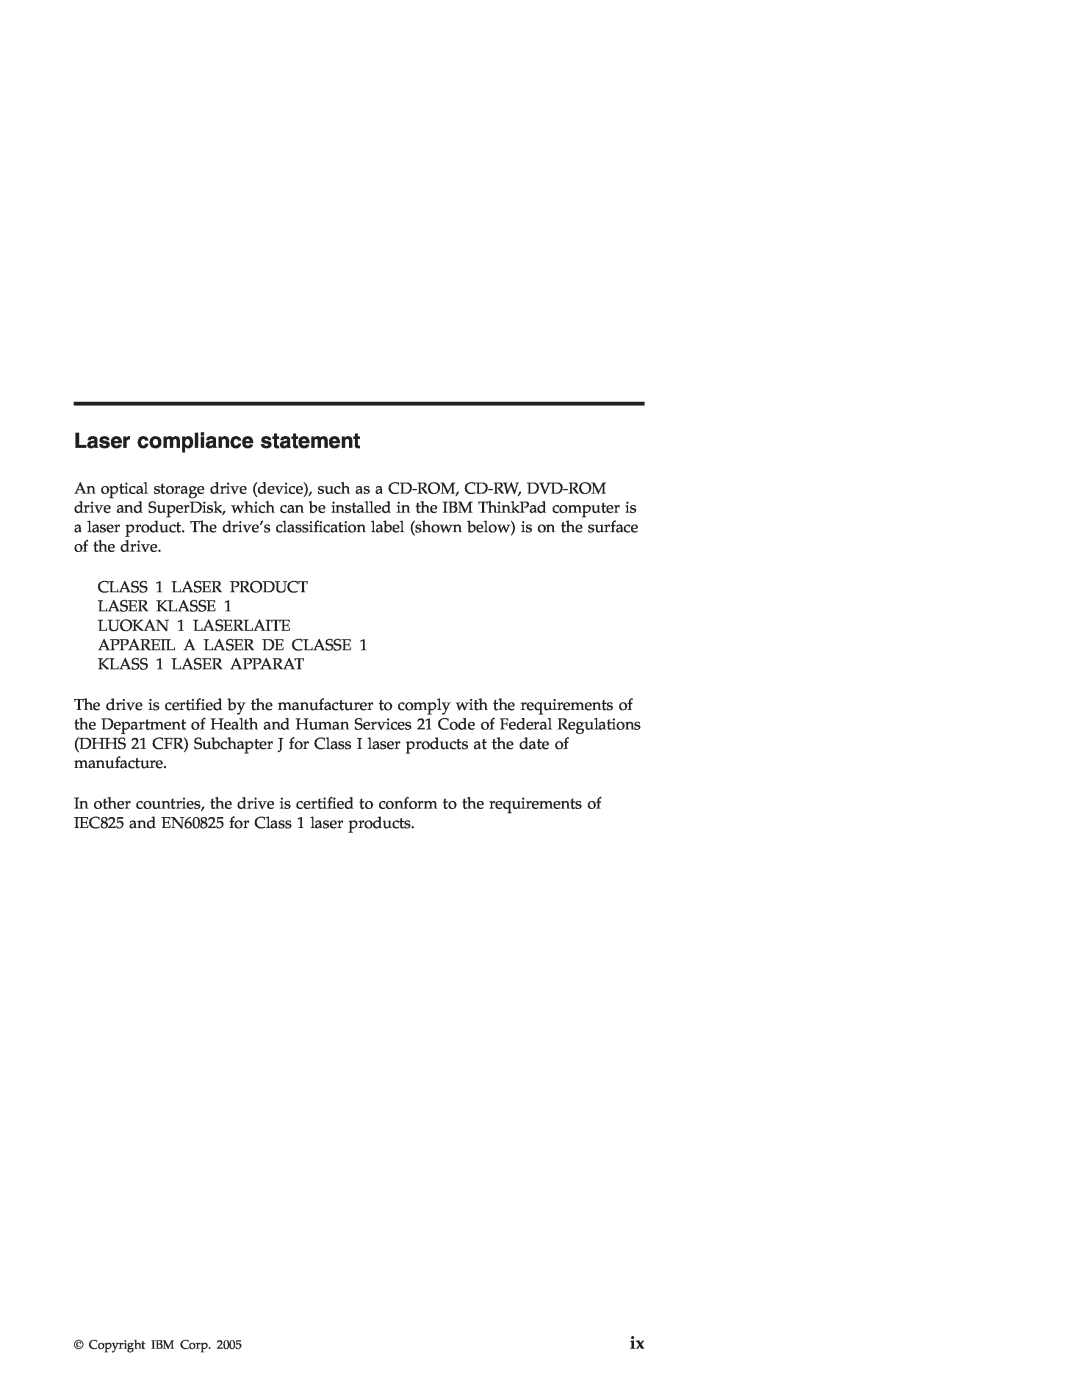 IBM X4 manual Laser compliance statement 